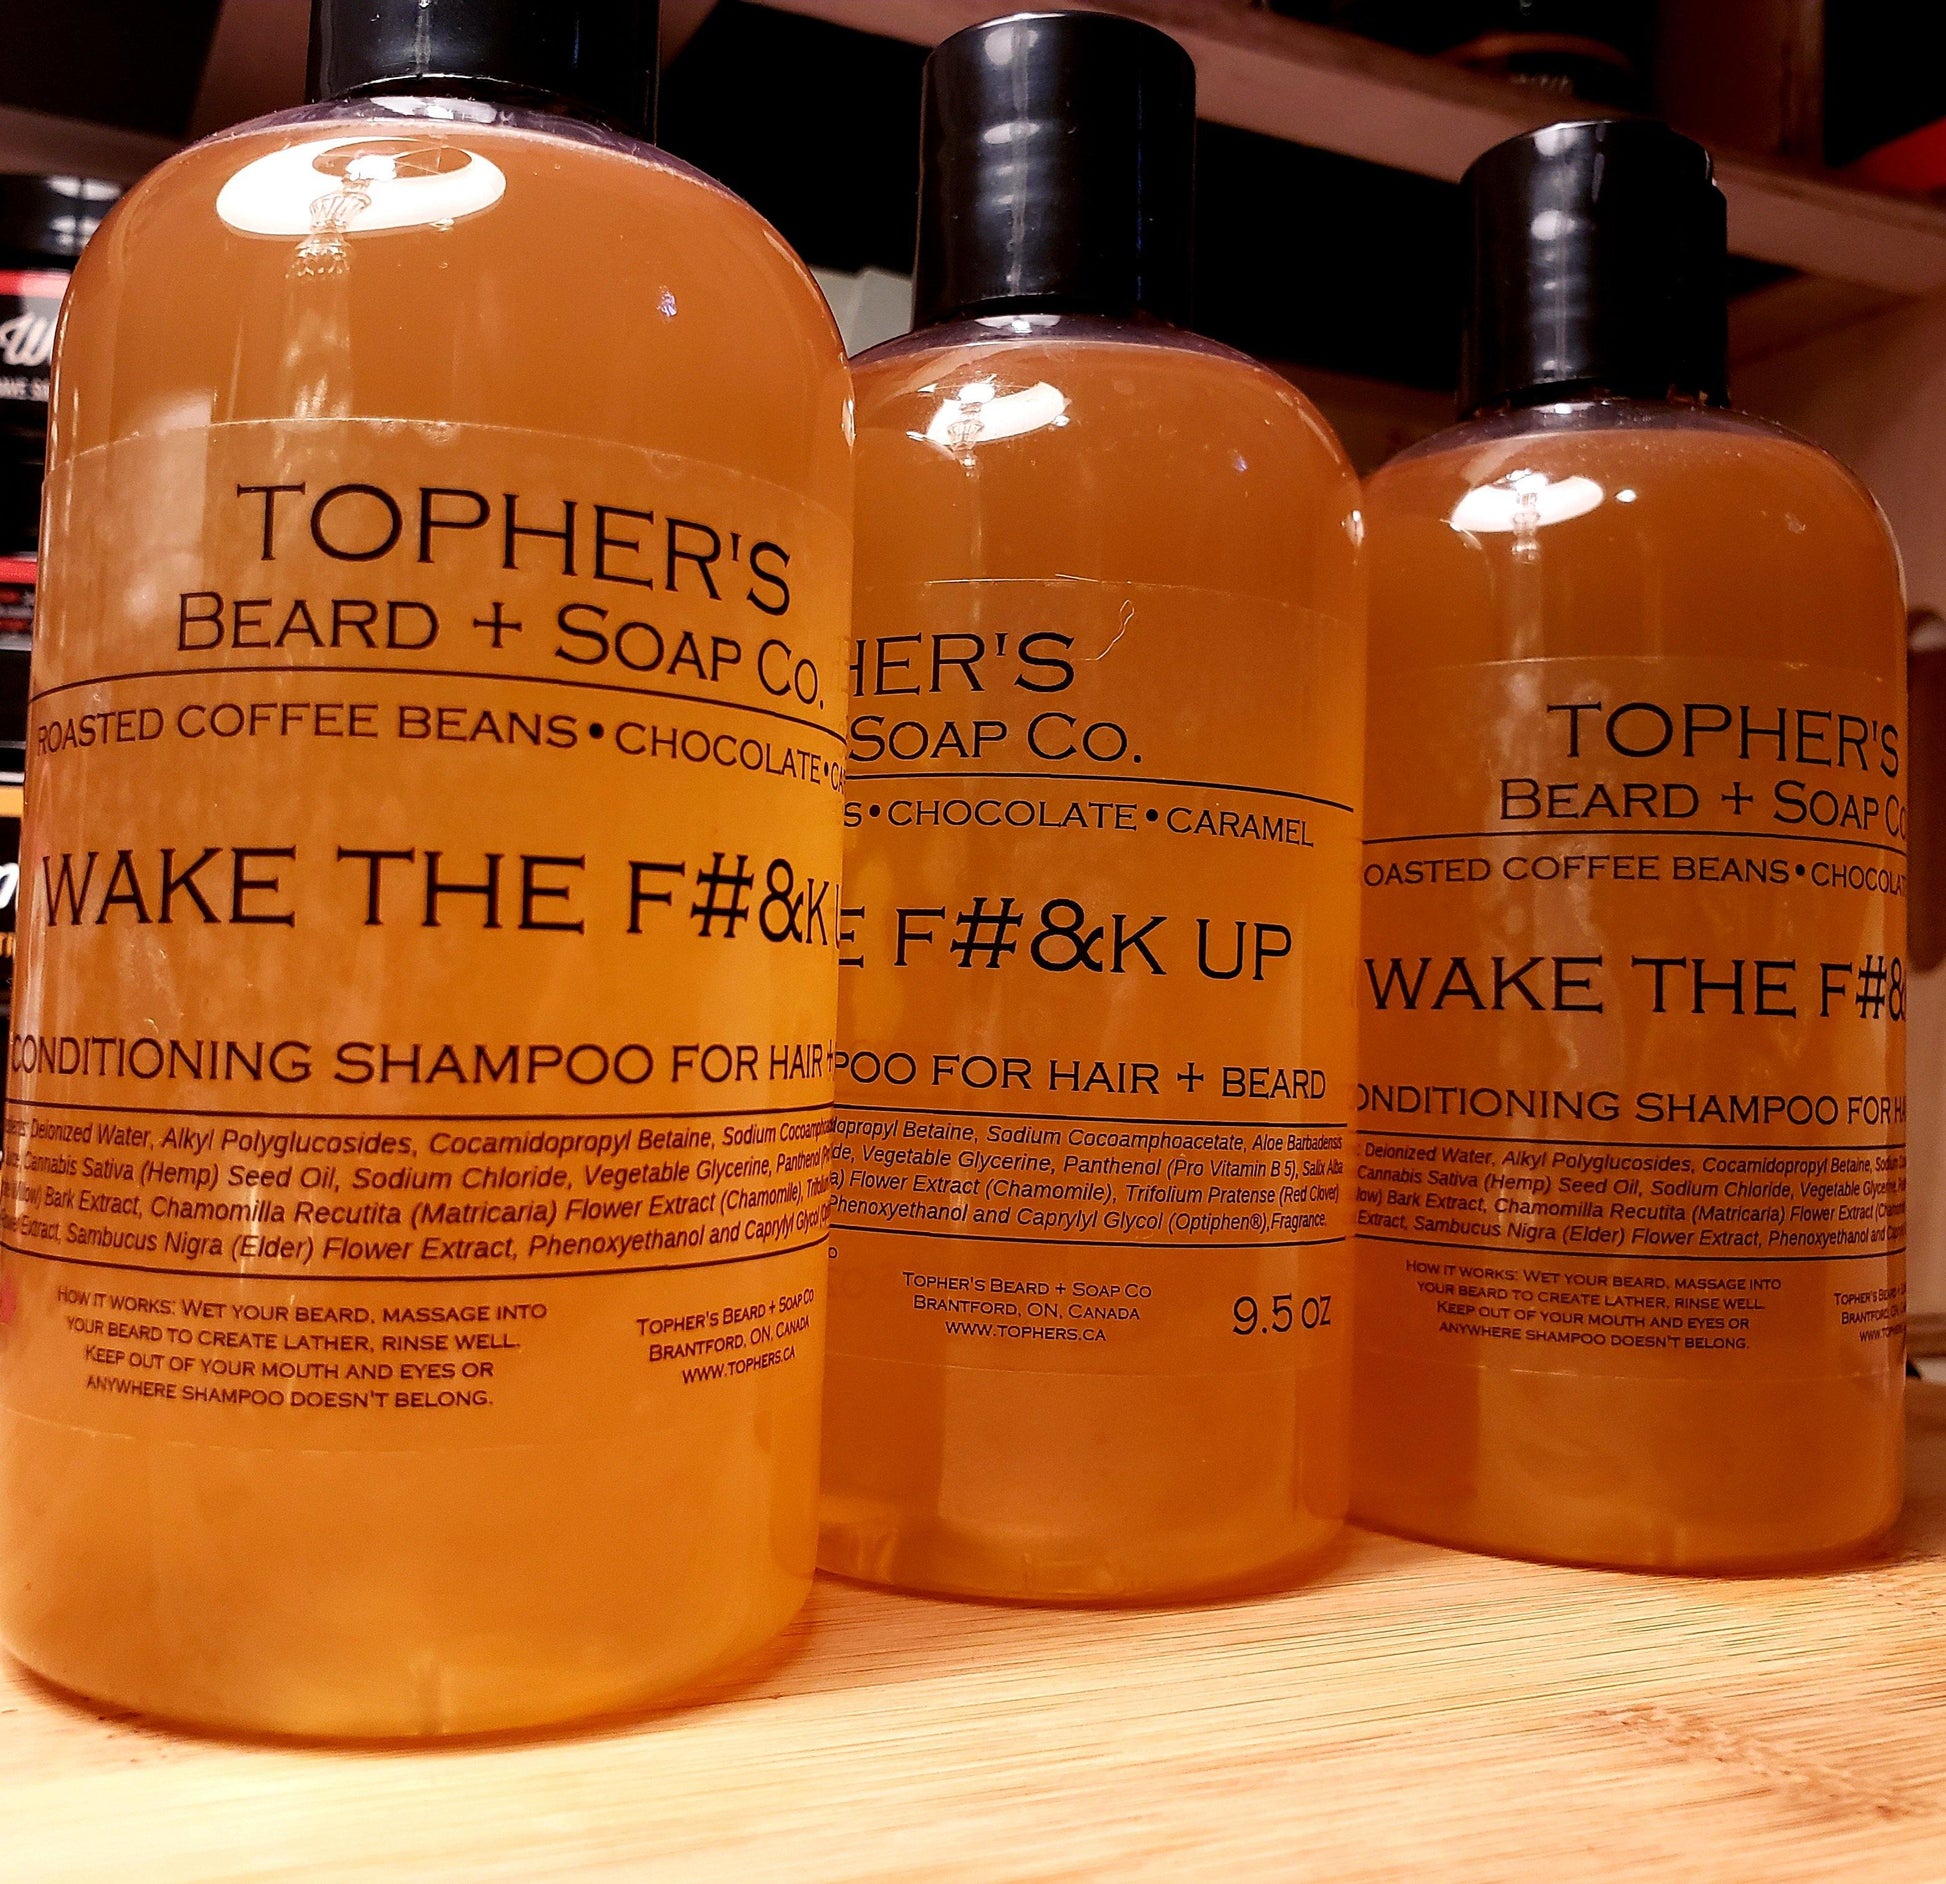 Wake The F#&k Up! - 2 In 1 Hair + Beard Shampoo - The Wandering Merchant